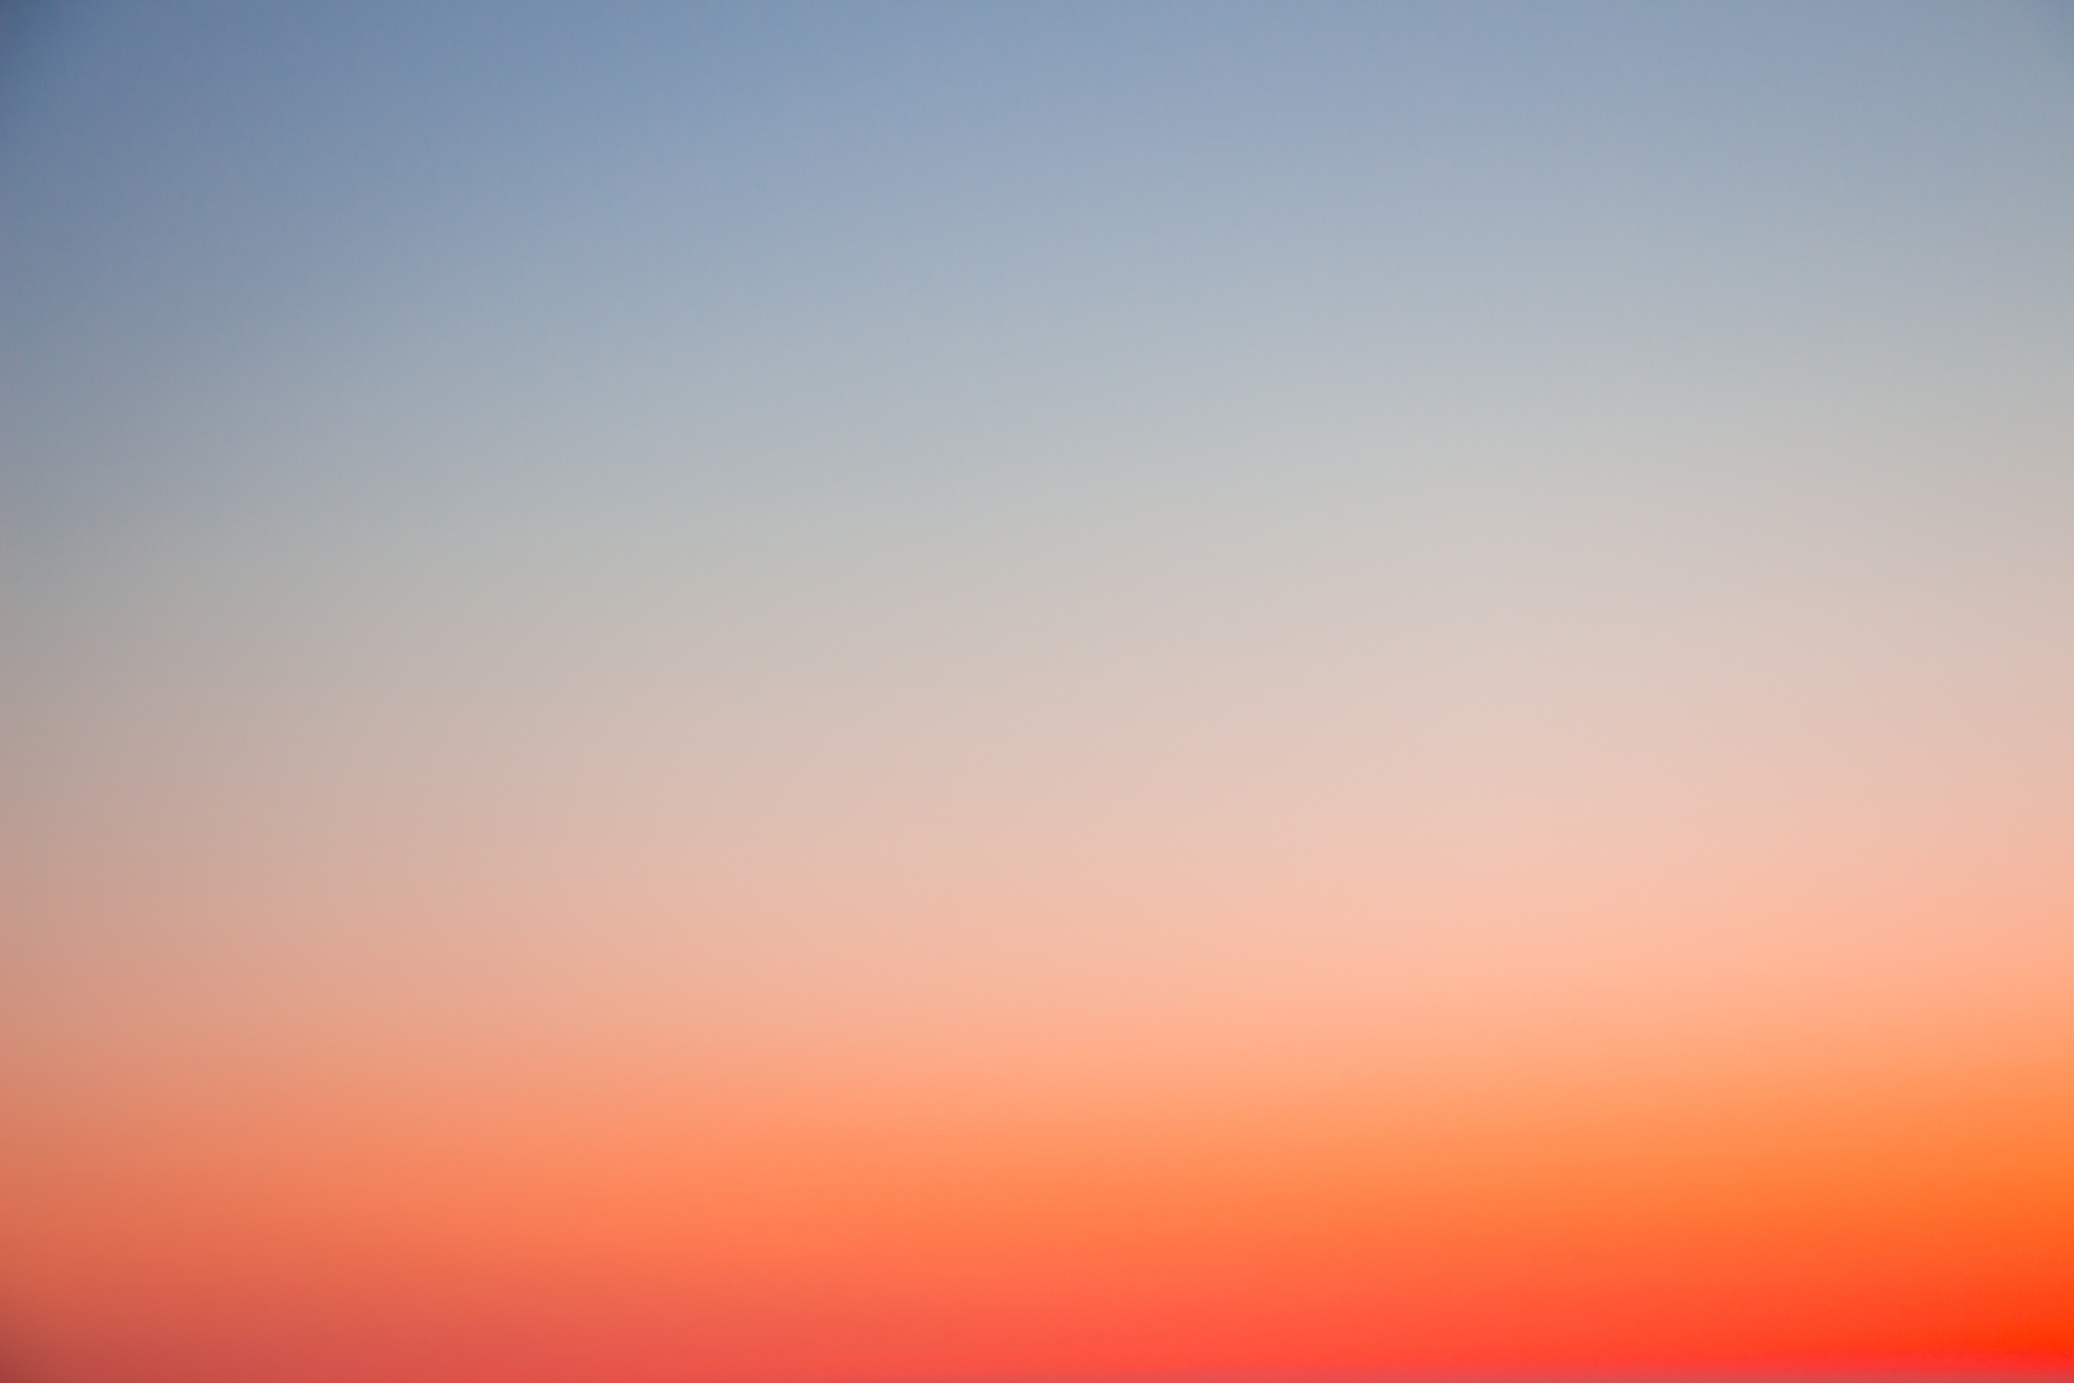 sunset teal and orange background